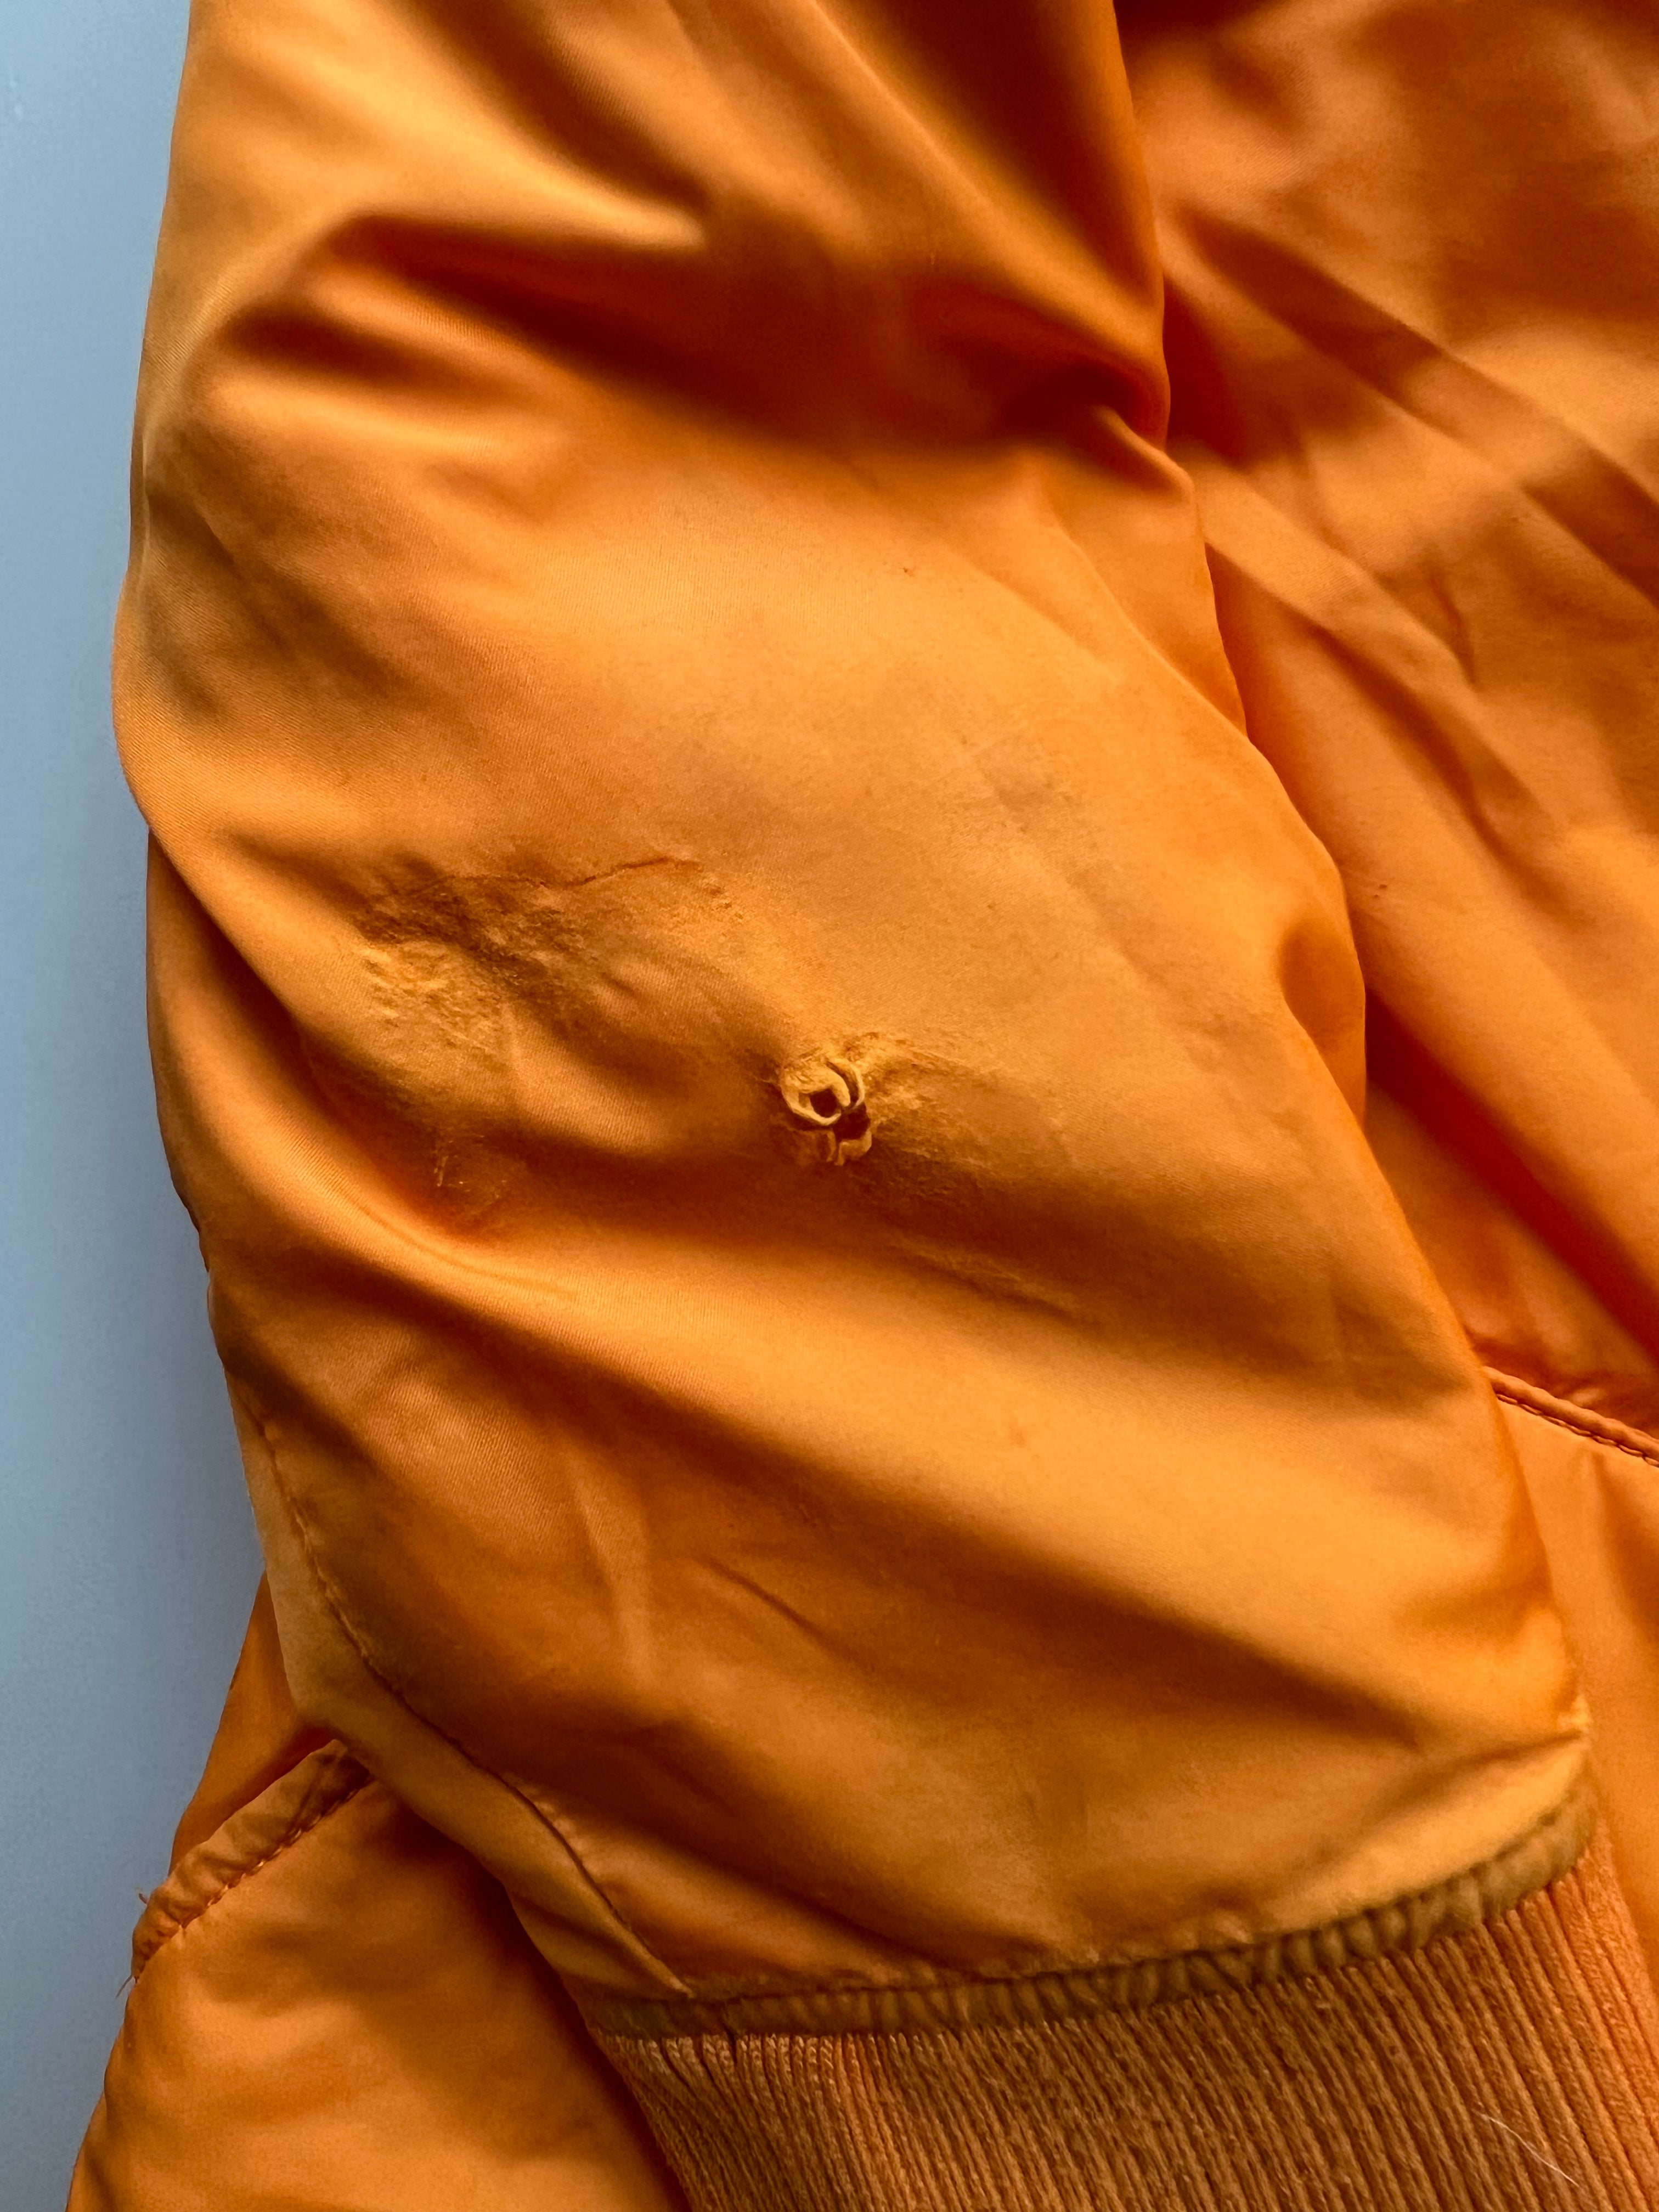 Arket Tangerine Insulator Jacket Age 8-9